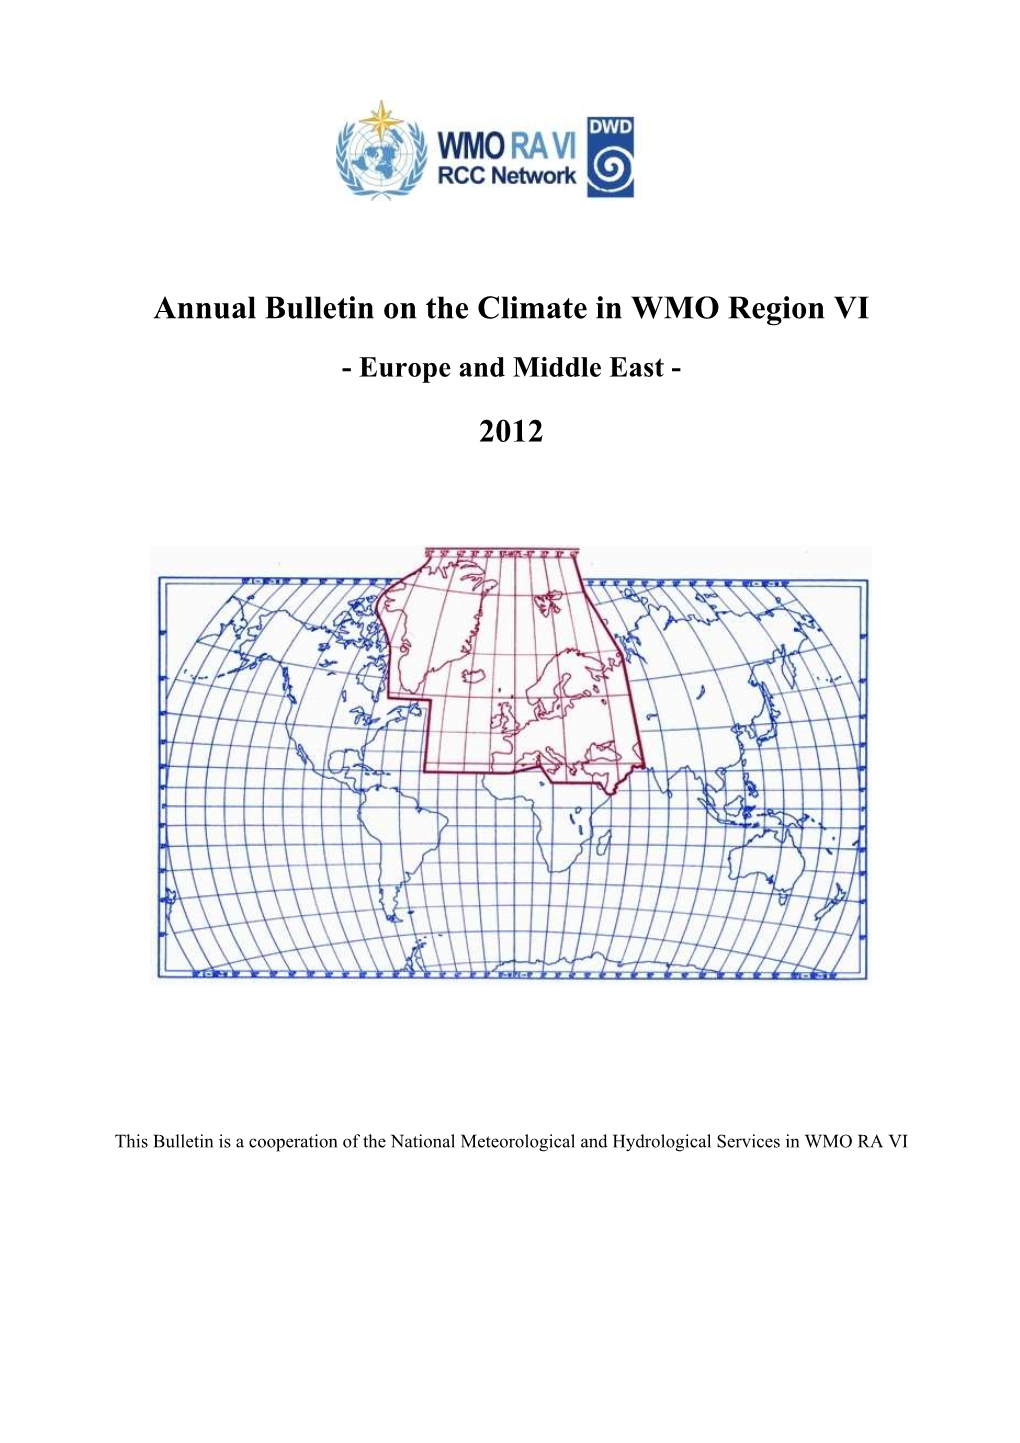 Annual Bulletin on the Climate in WMO Region VI 2012 5